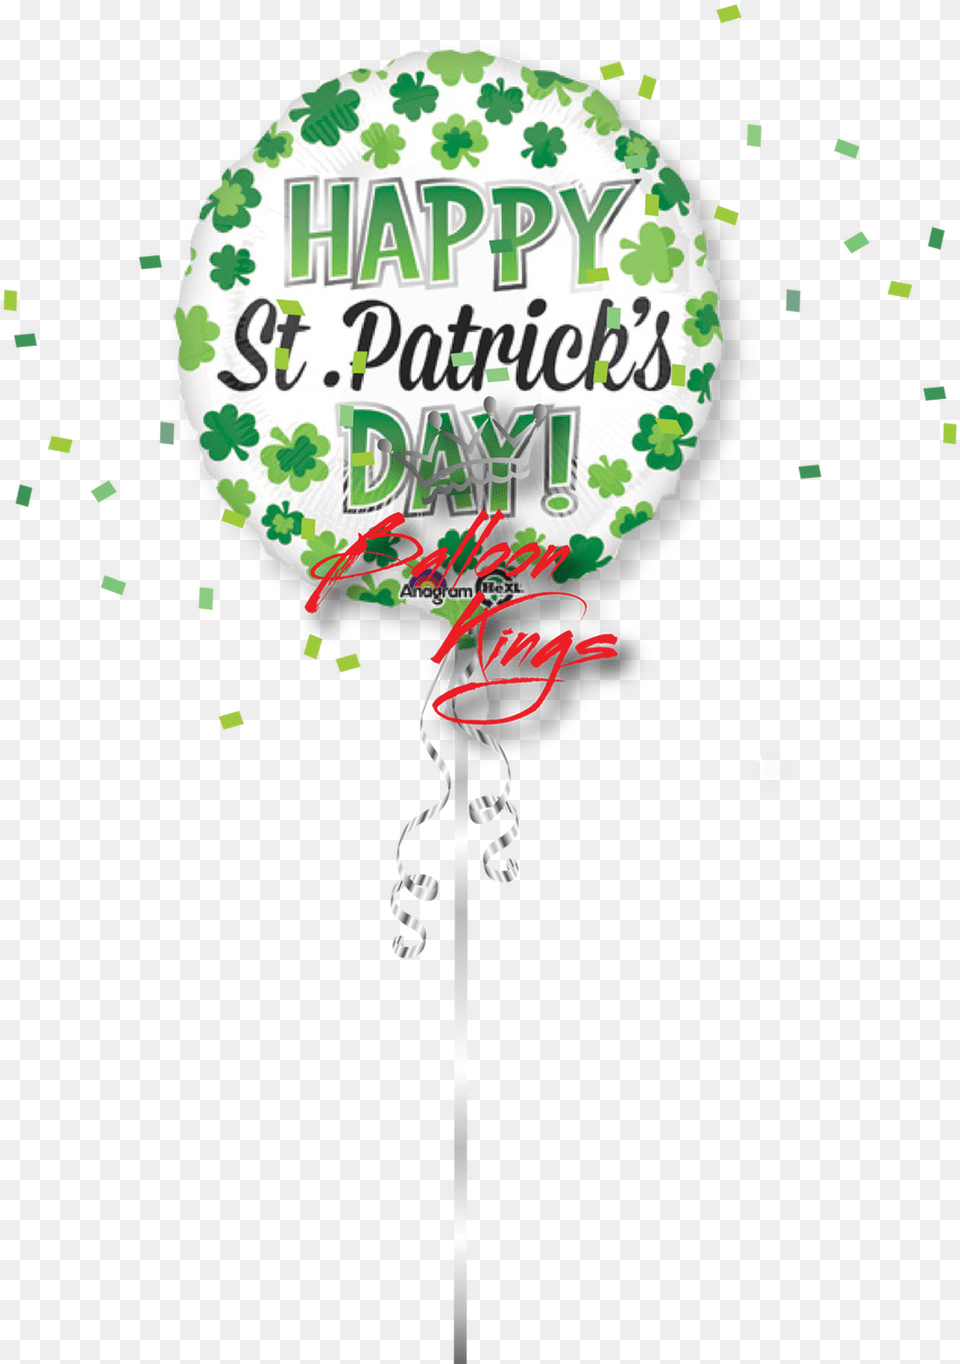 Happy St Patricks Day Shamrocks Fte De La Musique, Food, Sweets, Candy, Balloon Free Png